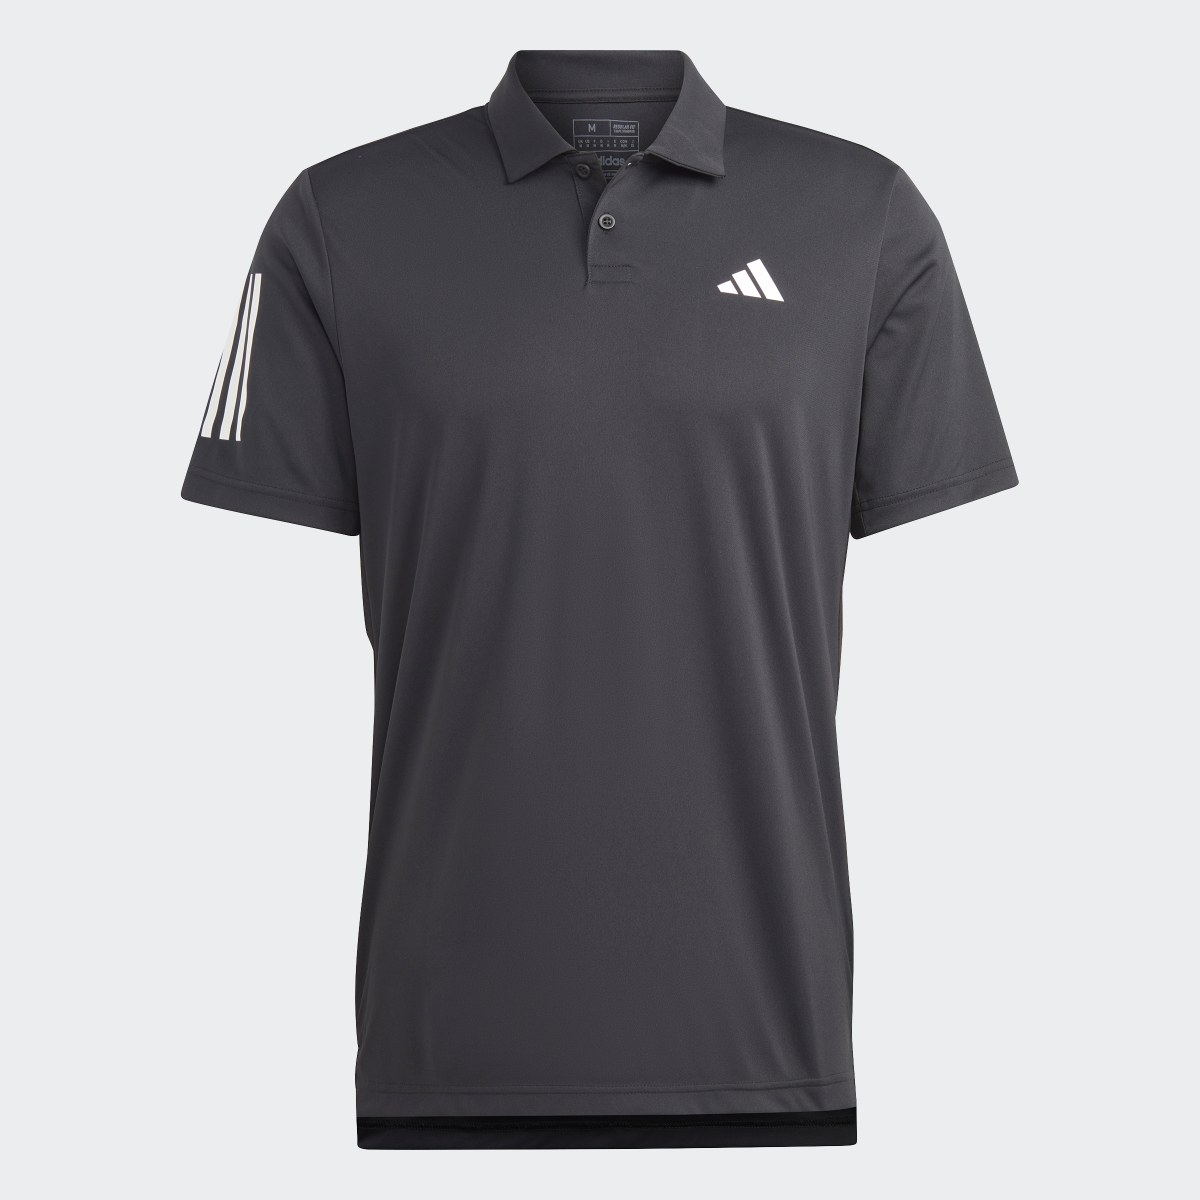 Adidas Club 3-Stripes Tennis Polo Tişört. 5